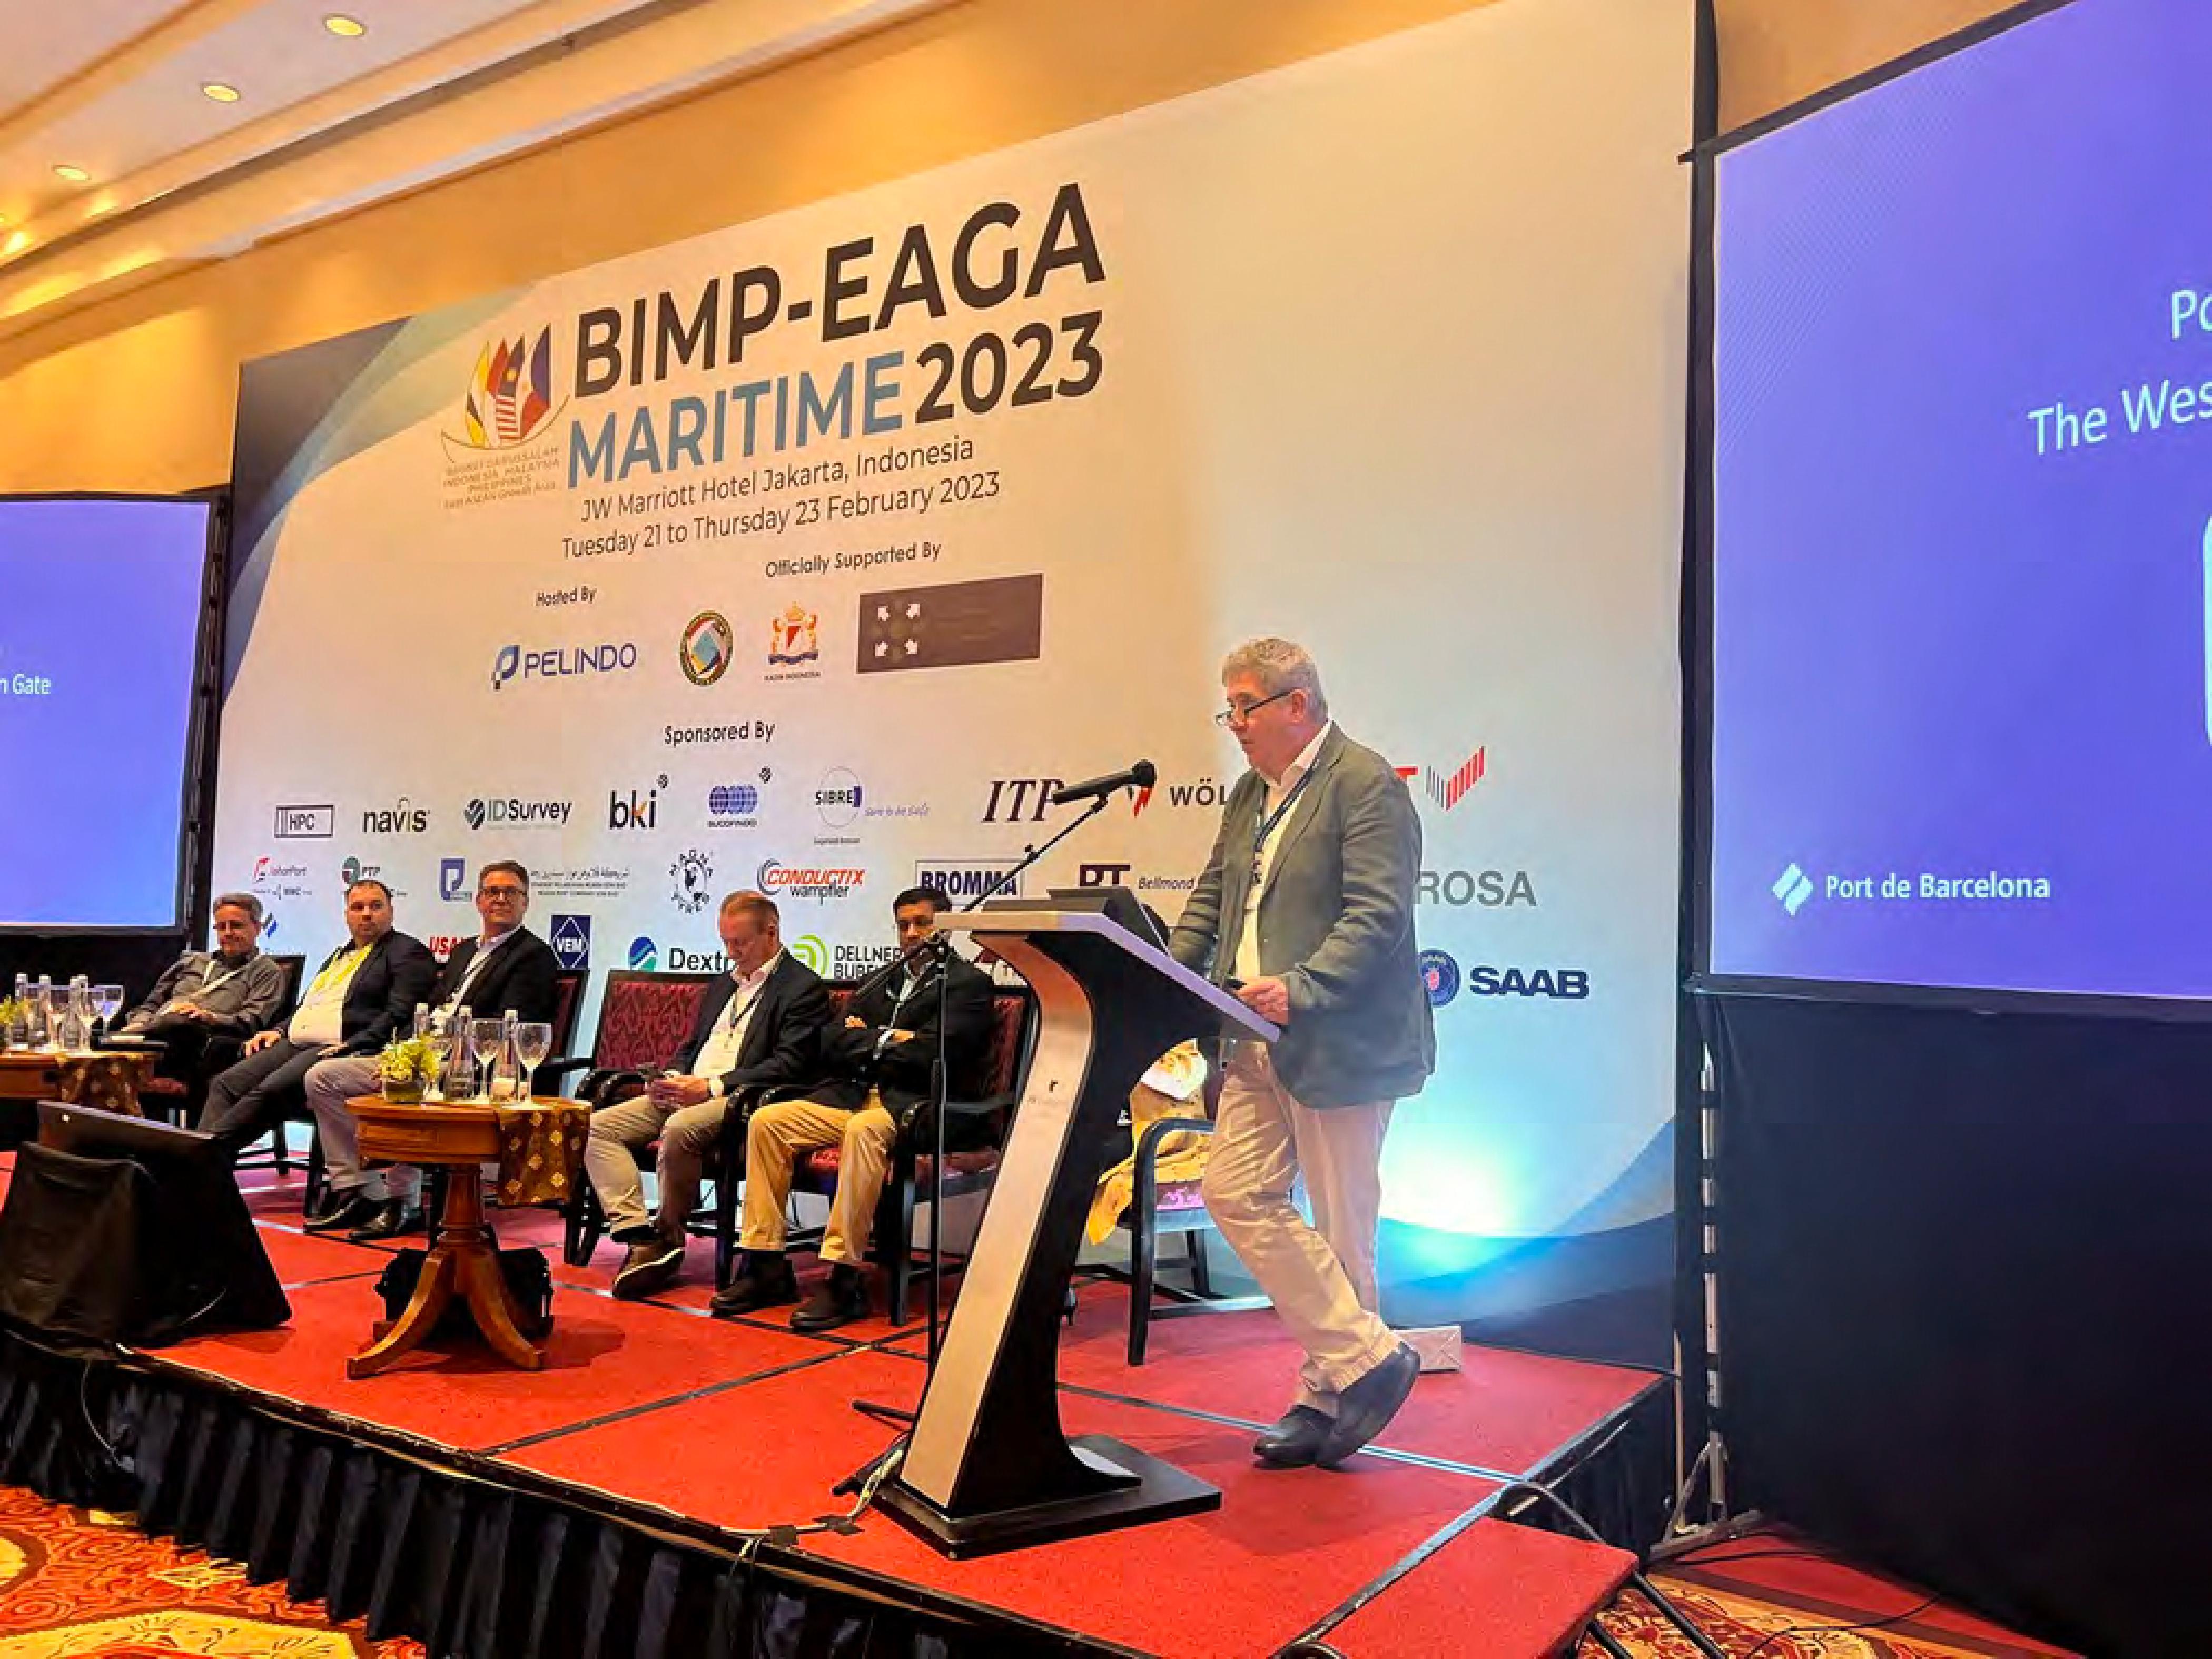 BIMP-EAGA Maritime 2023 - BMT highlights